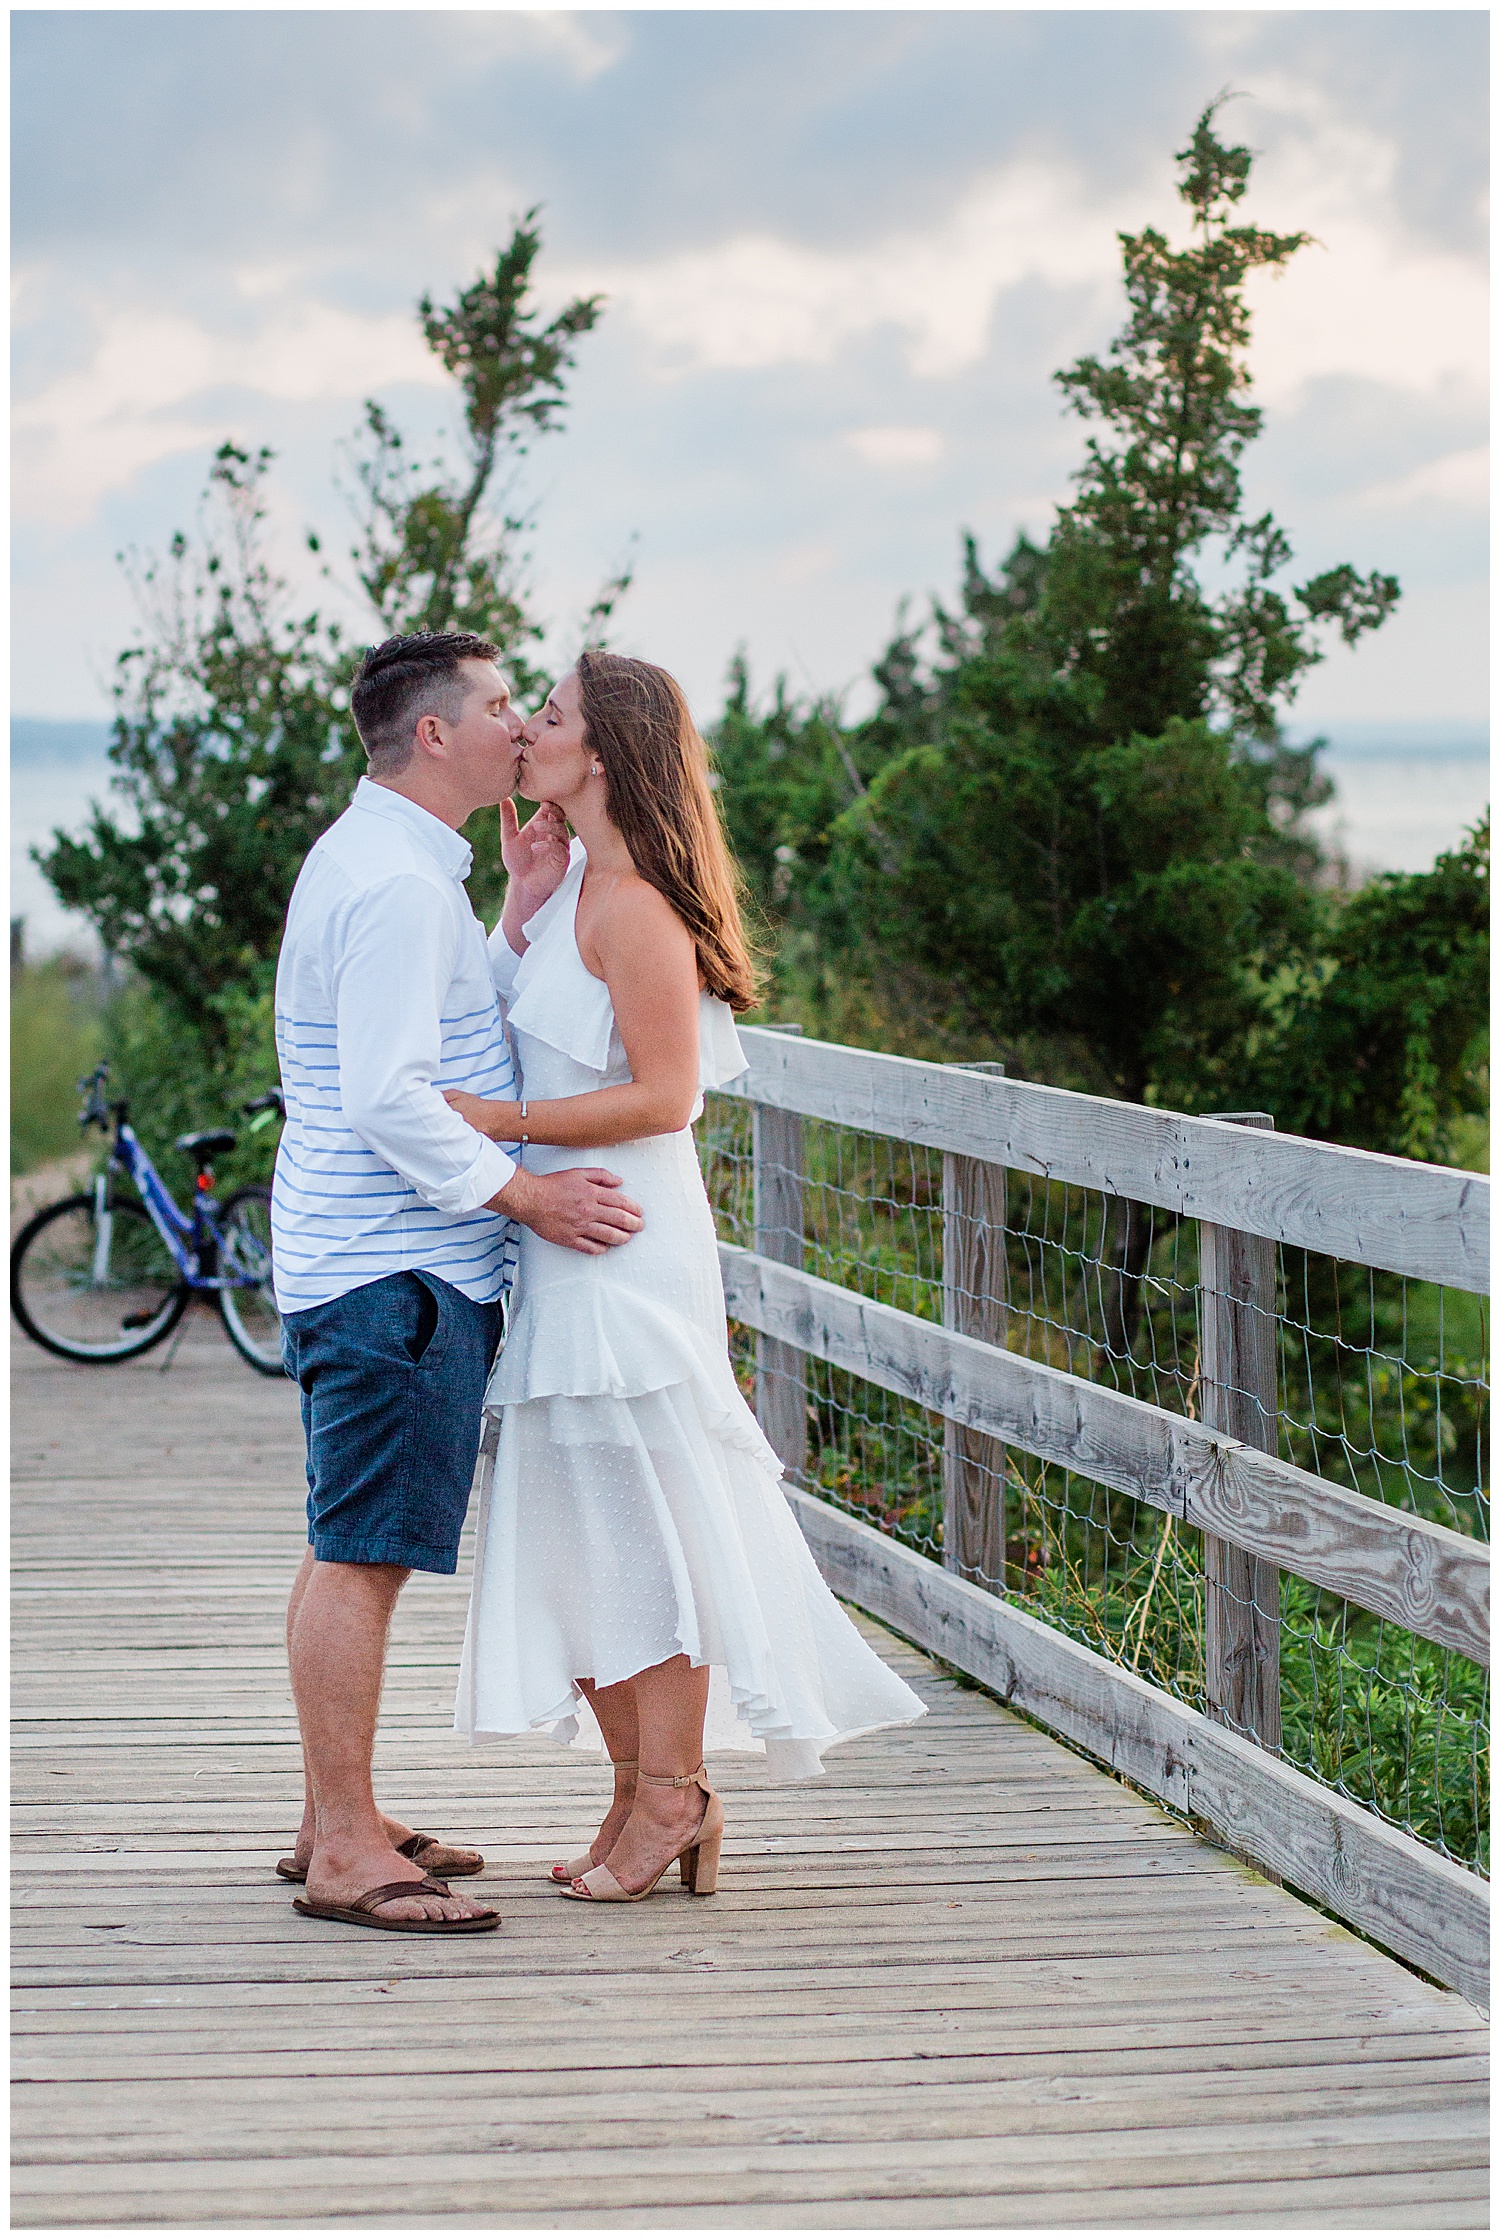 Couple kiss on boarded beach path